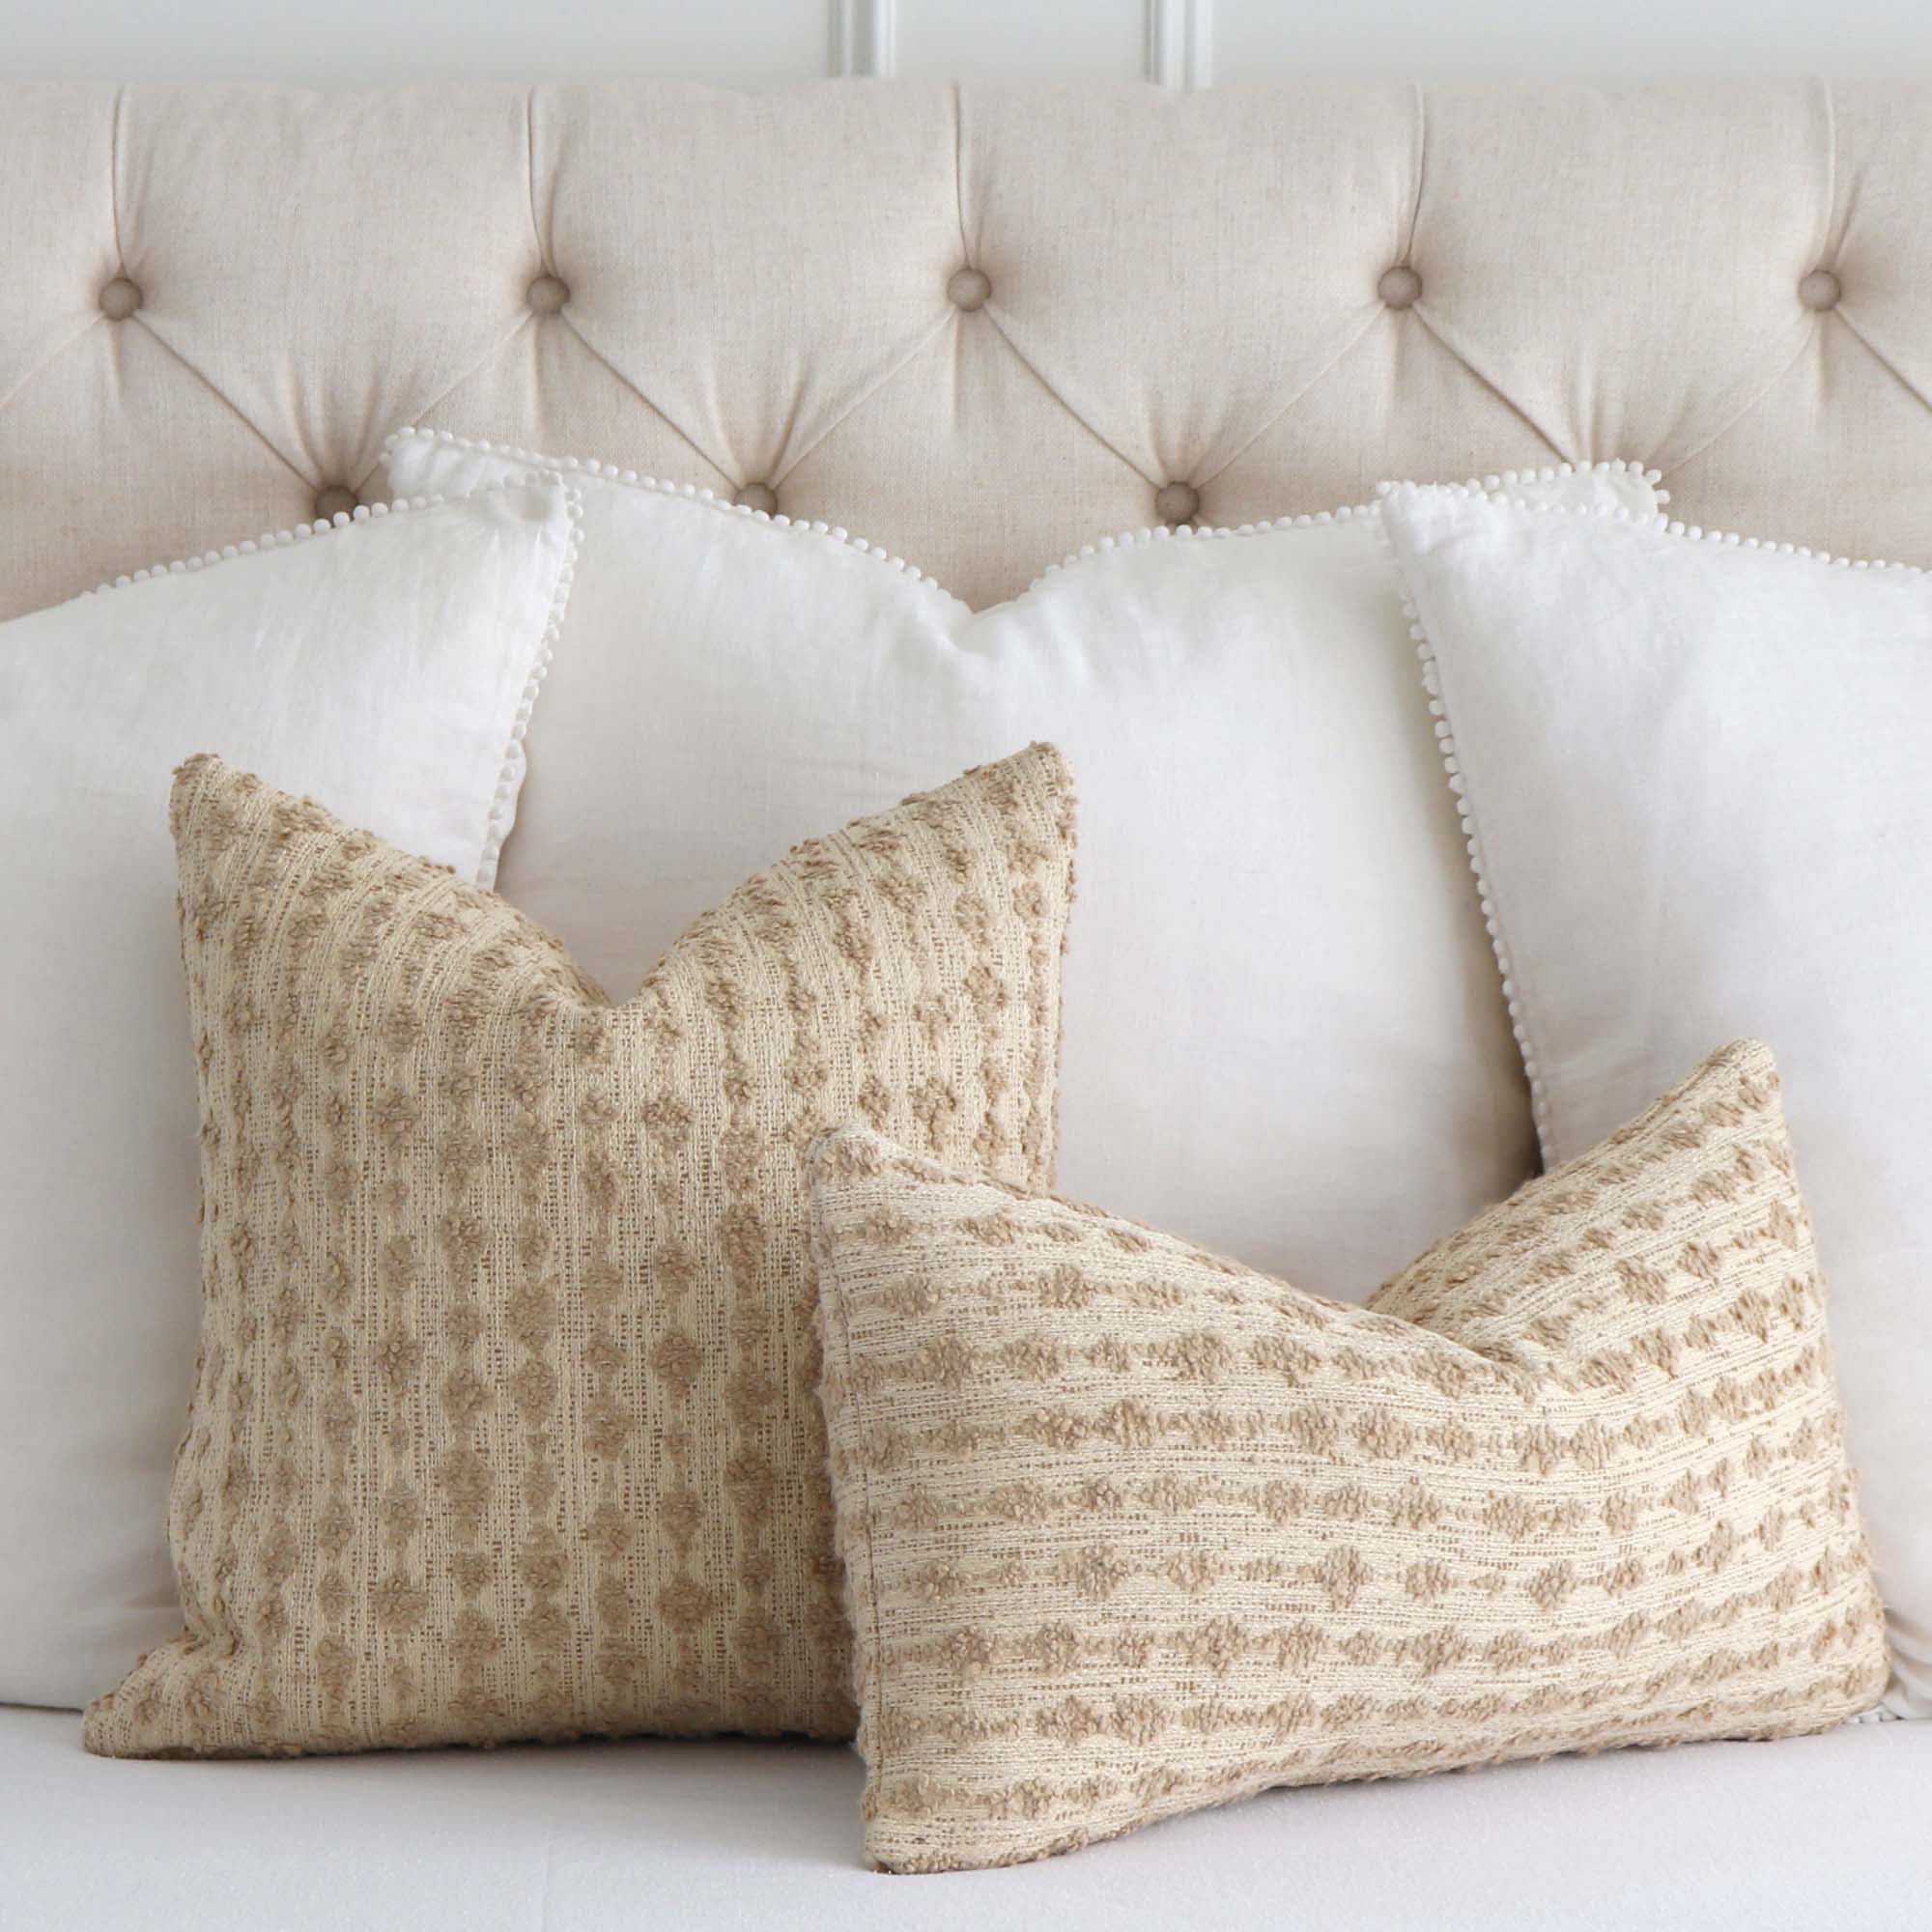 Kelly Wearstler LeeJofa Alabaster Stripe Bouclé Designer Throw Pillow Cover on Bed